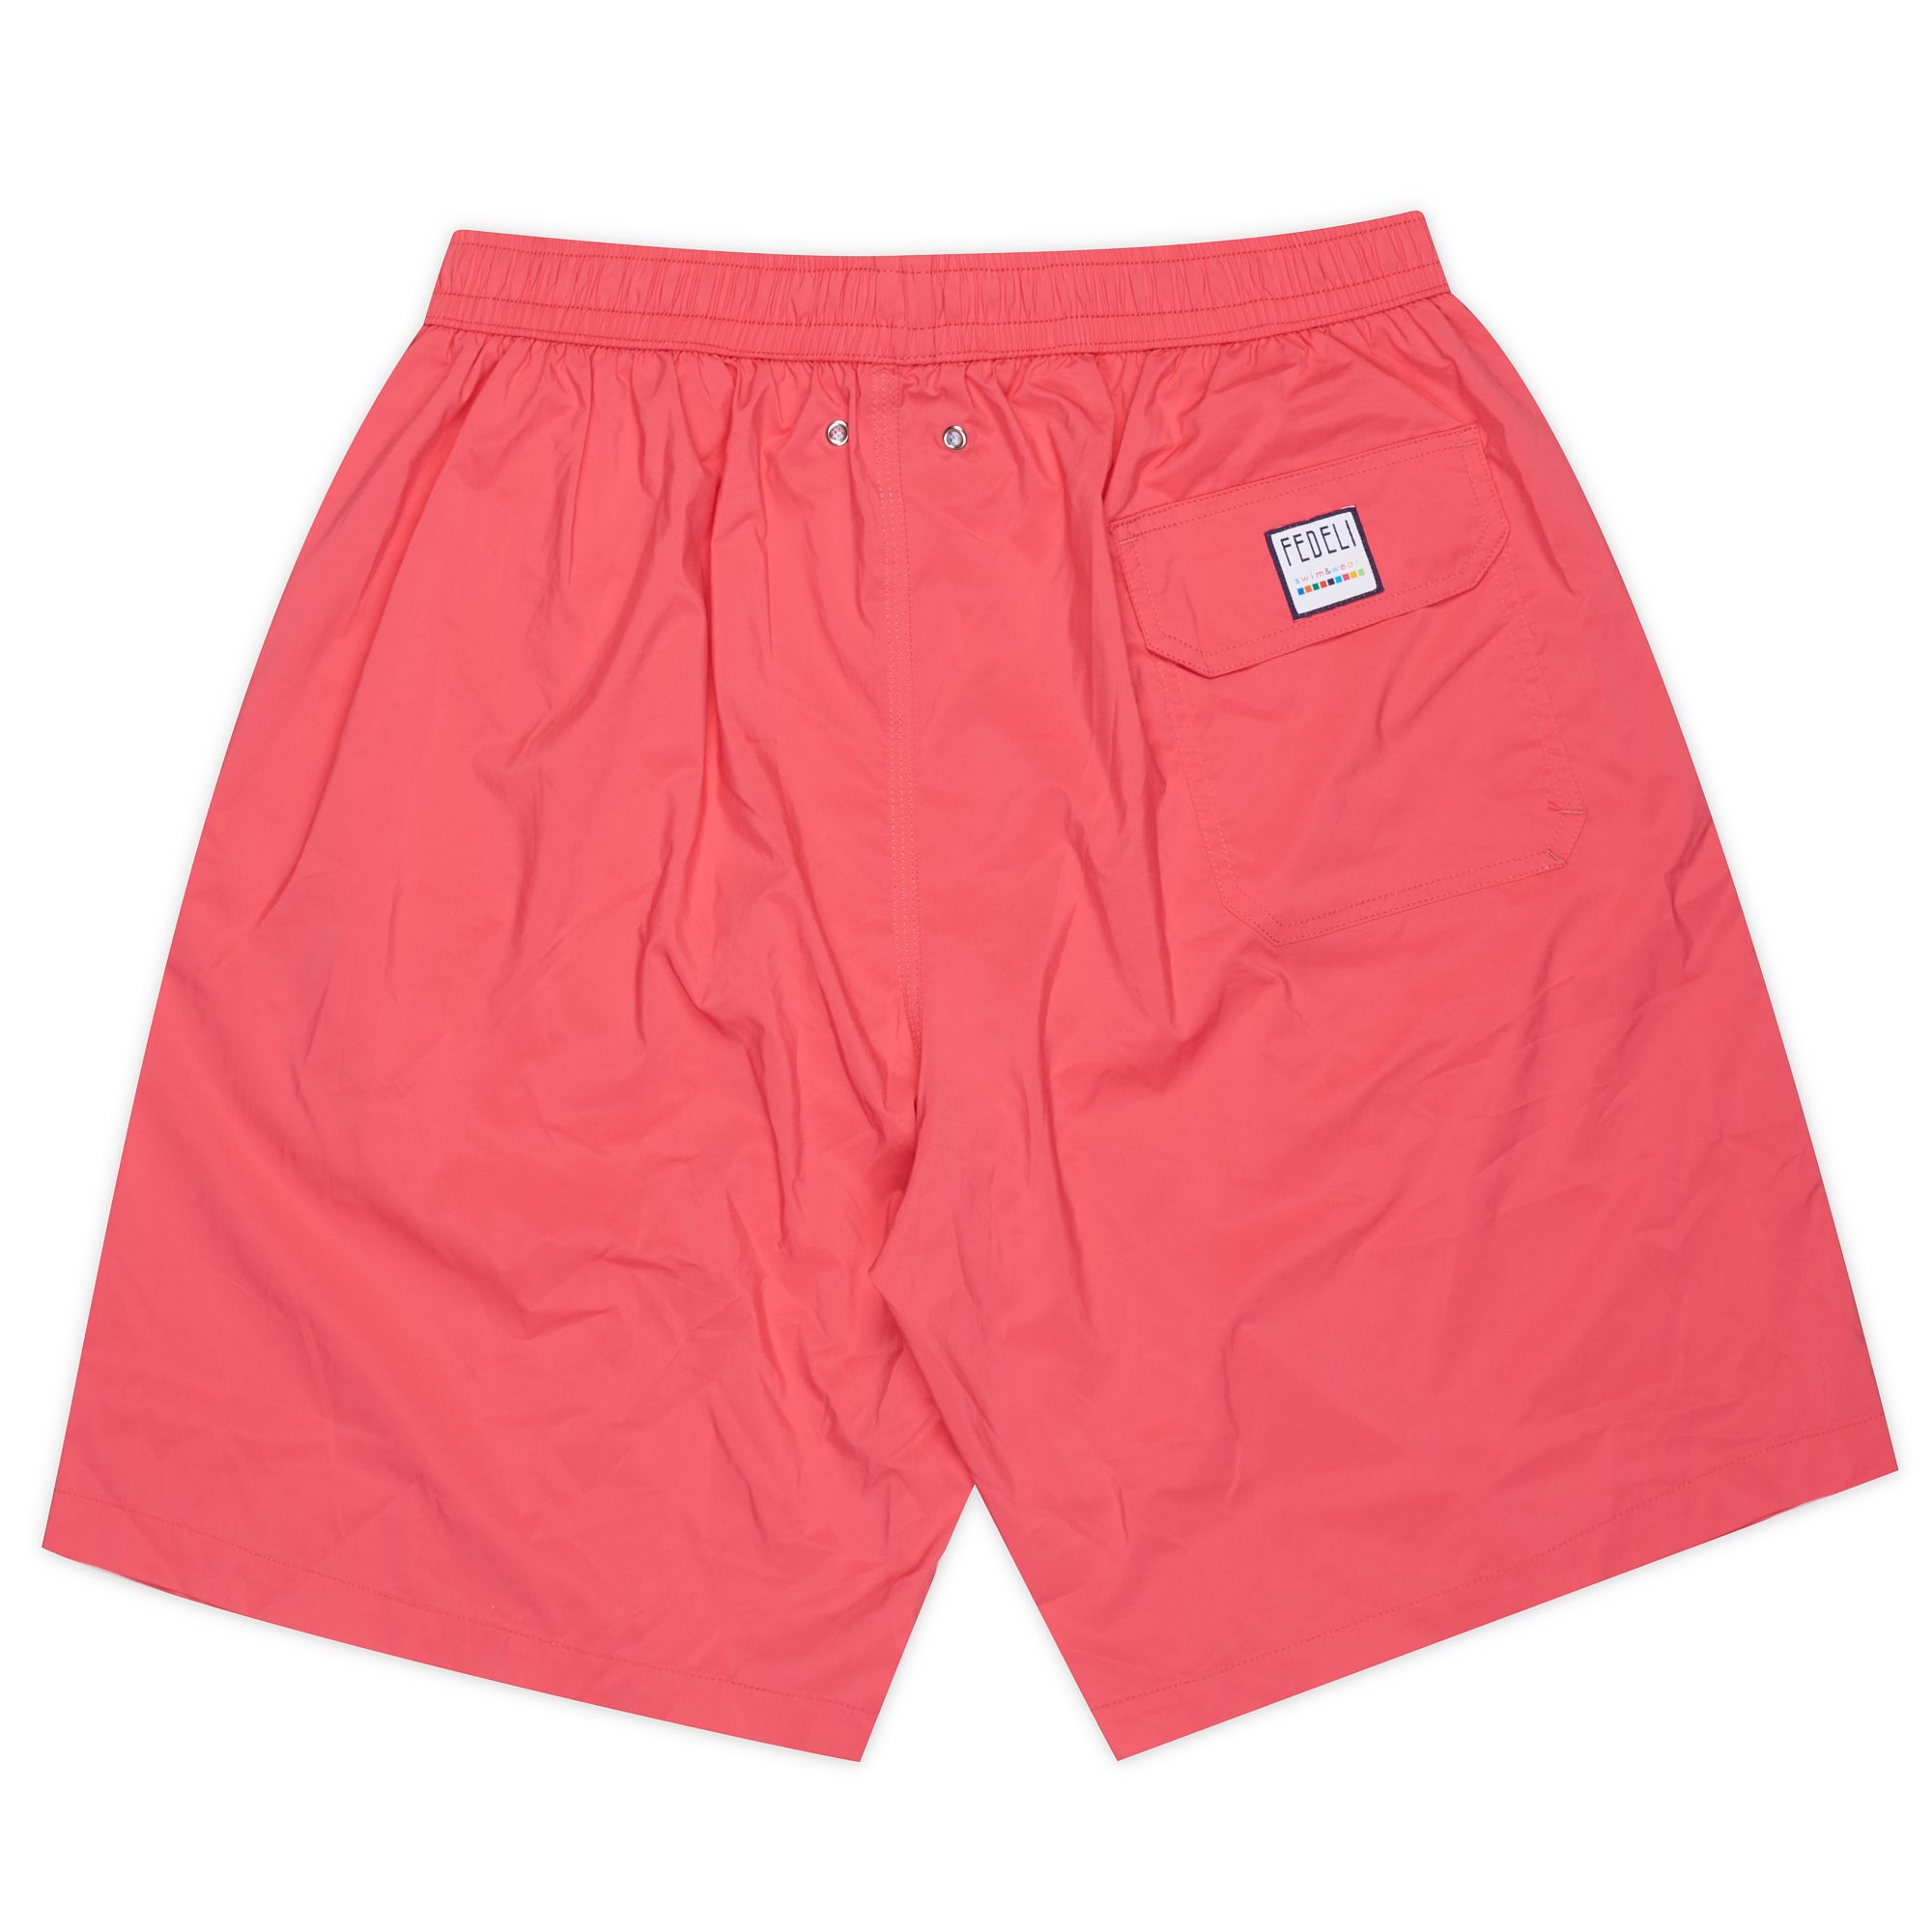 FEDELI Dark Pink Positano Airstop Swim Shorts Trunks NEW FEDELI